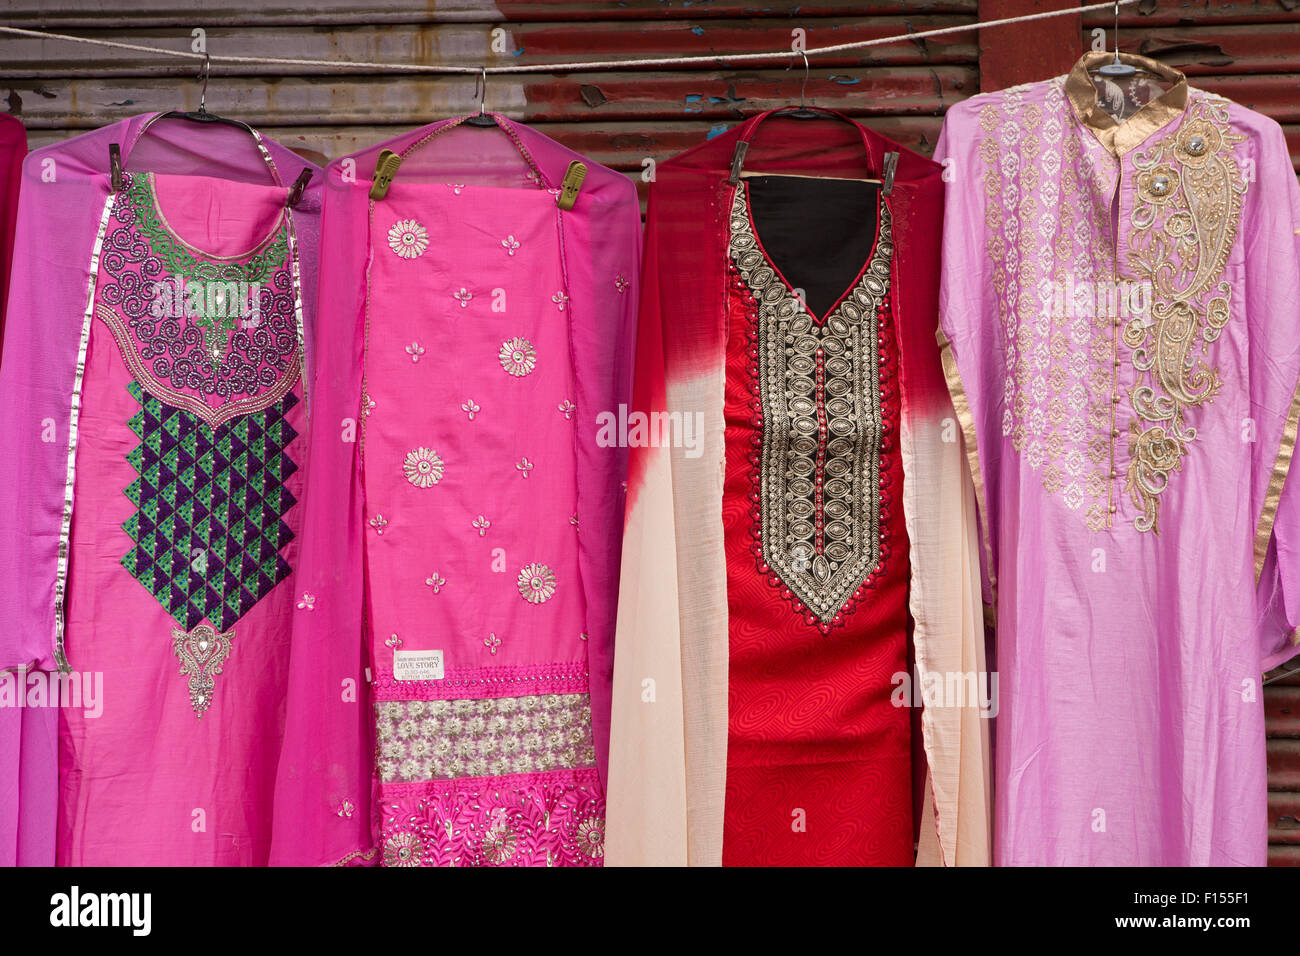 India, Jammu & Kashmir, Srinagar, Hazratbal, colourfully dyed women’s shalwar kameez clothing on clothes stall Stock Photo